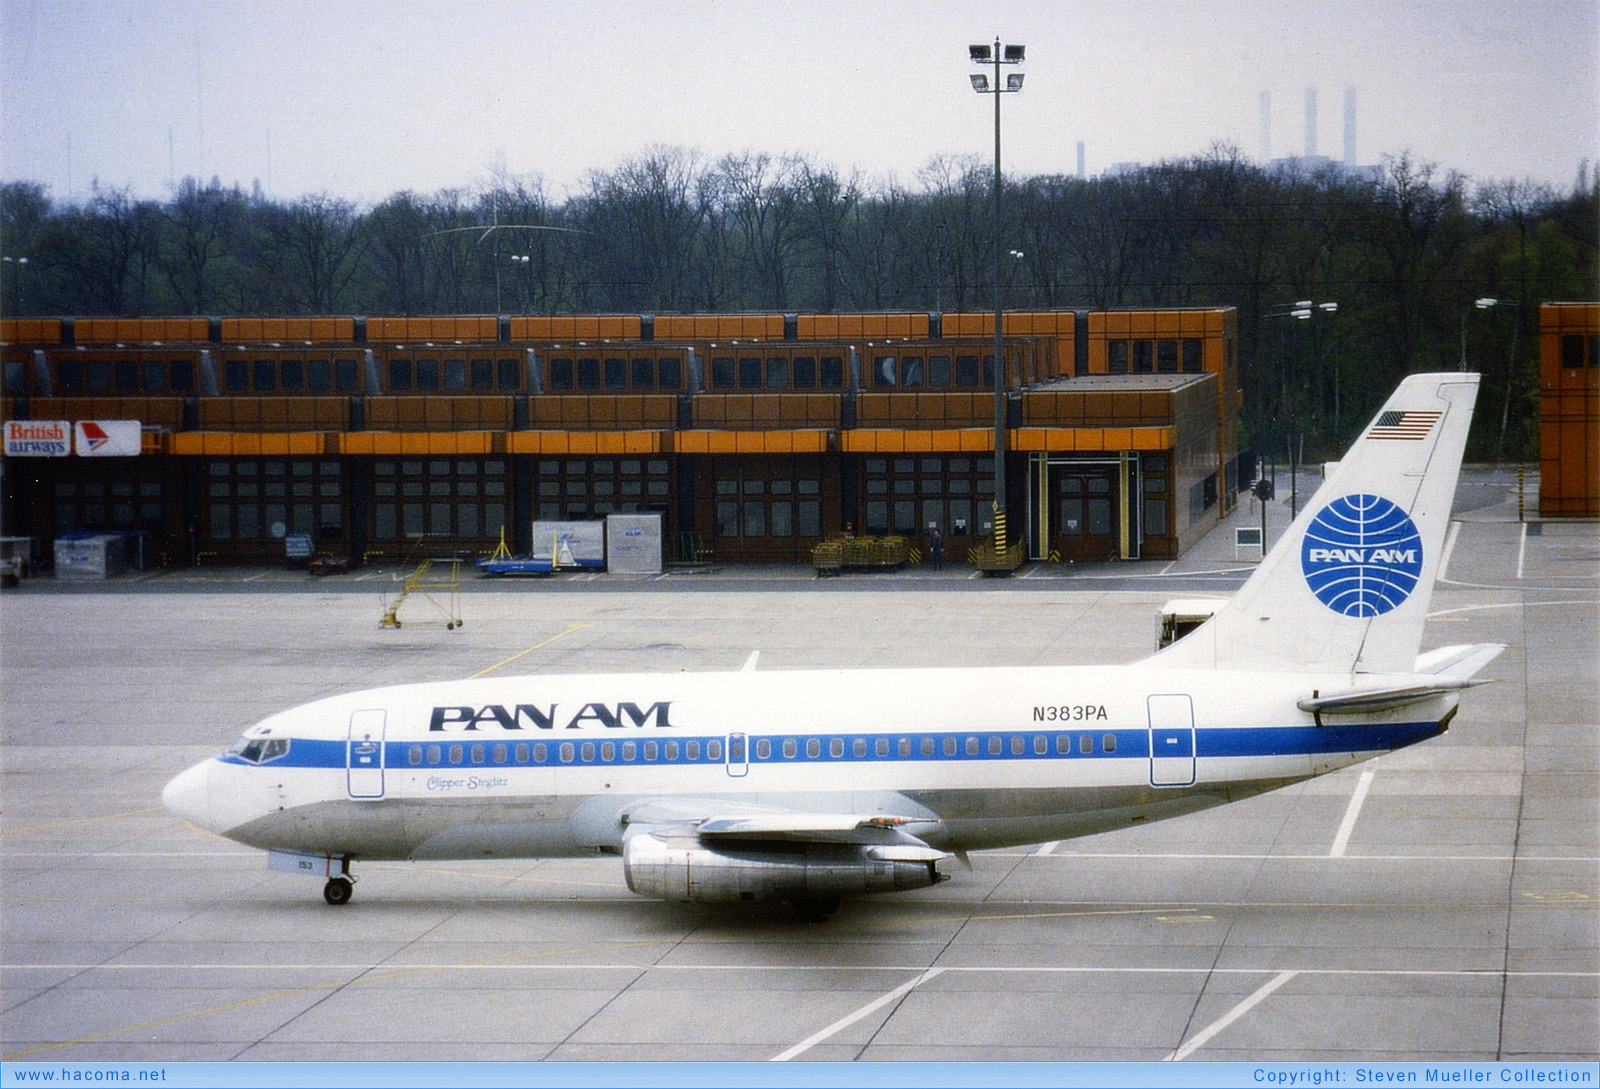 Foto von N383PA - Pan Am Clipper Steglitz - Flughafen Berlin-Tegel